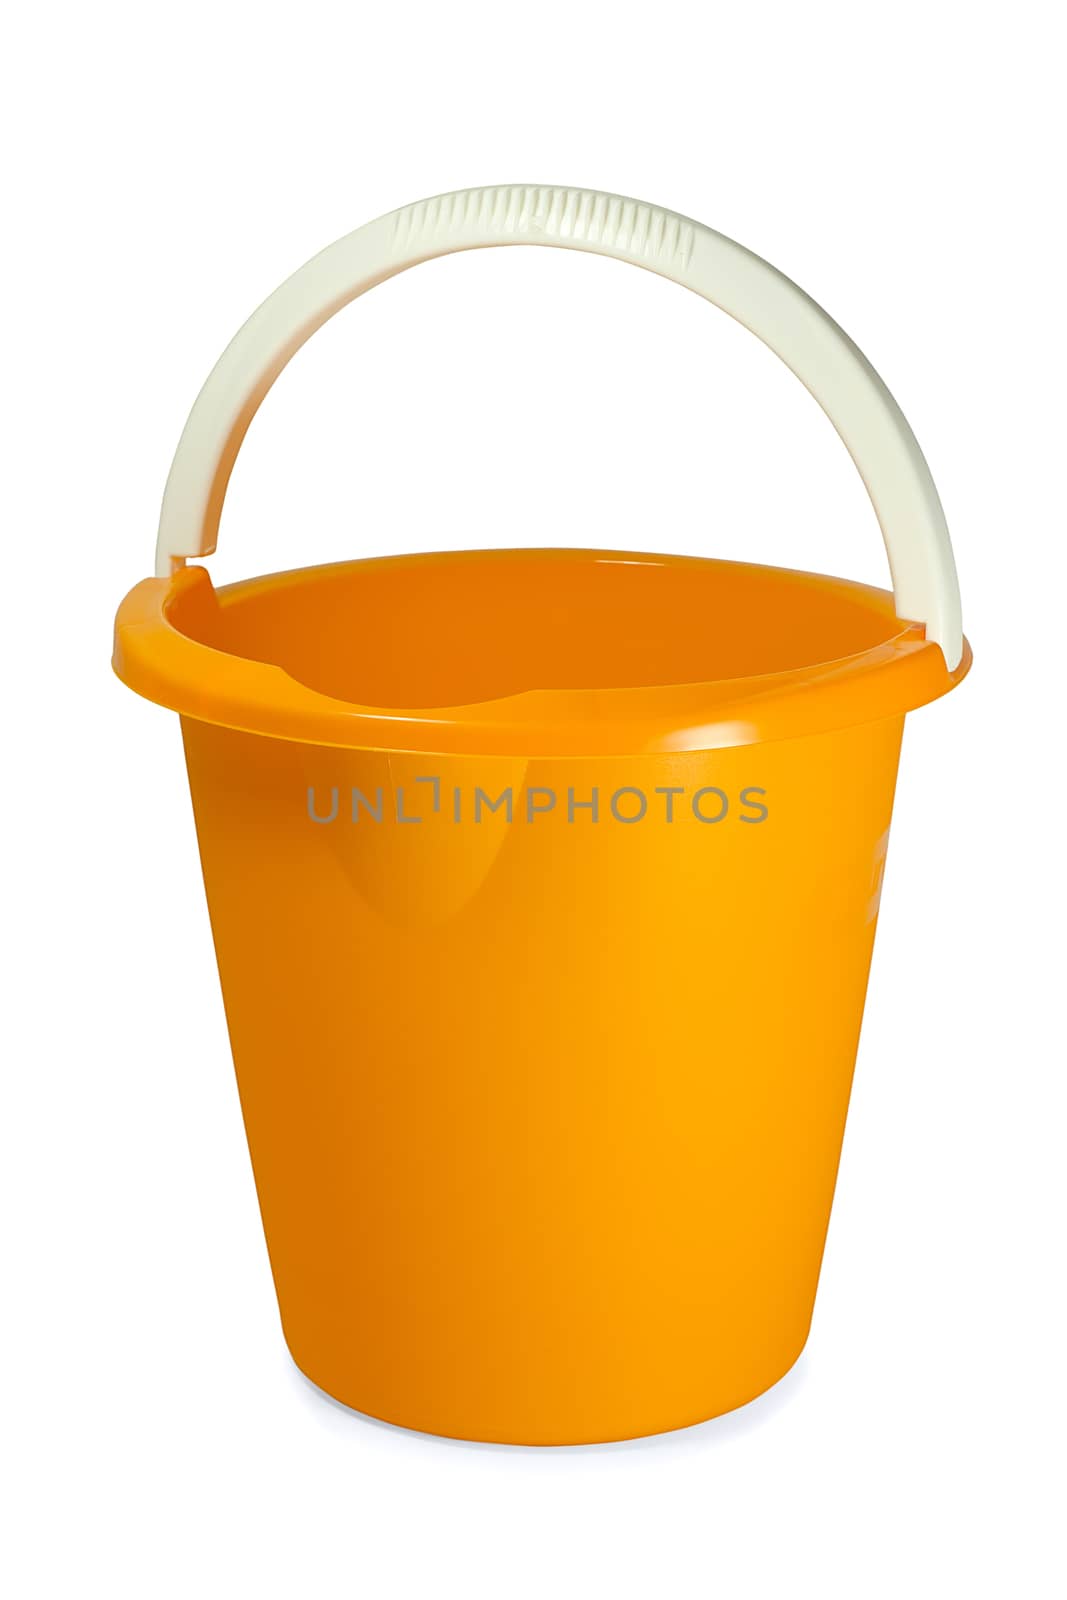 Yellow empty plastic bucket on white background